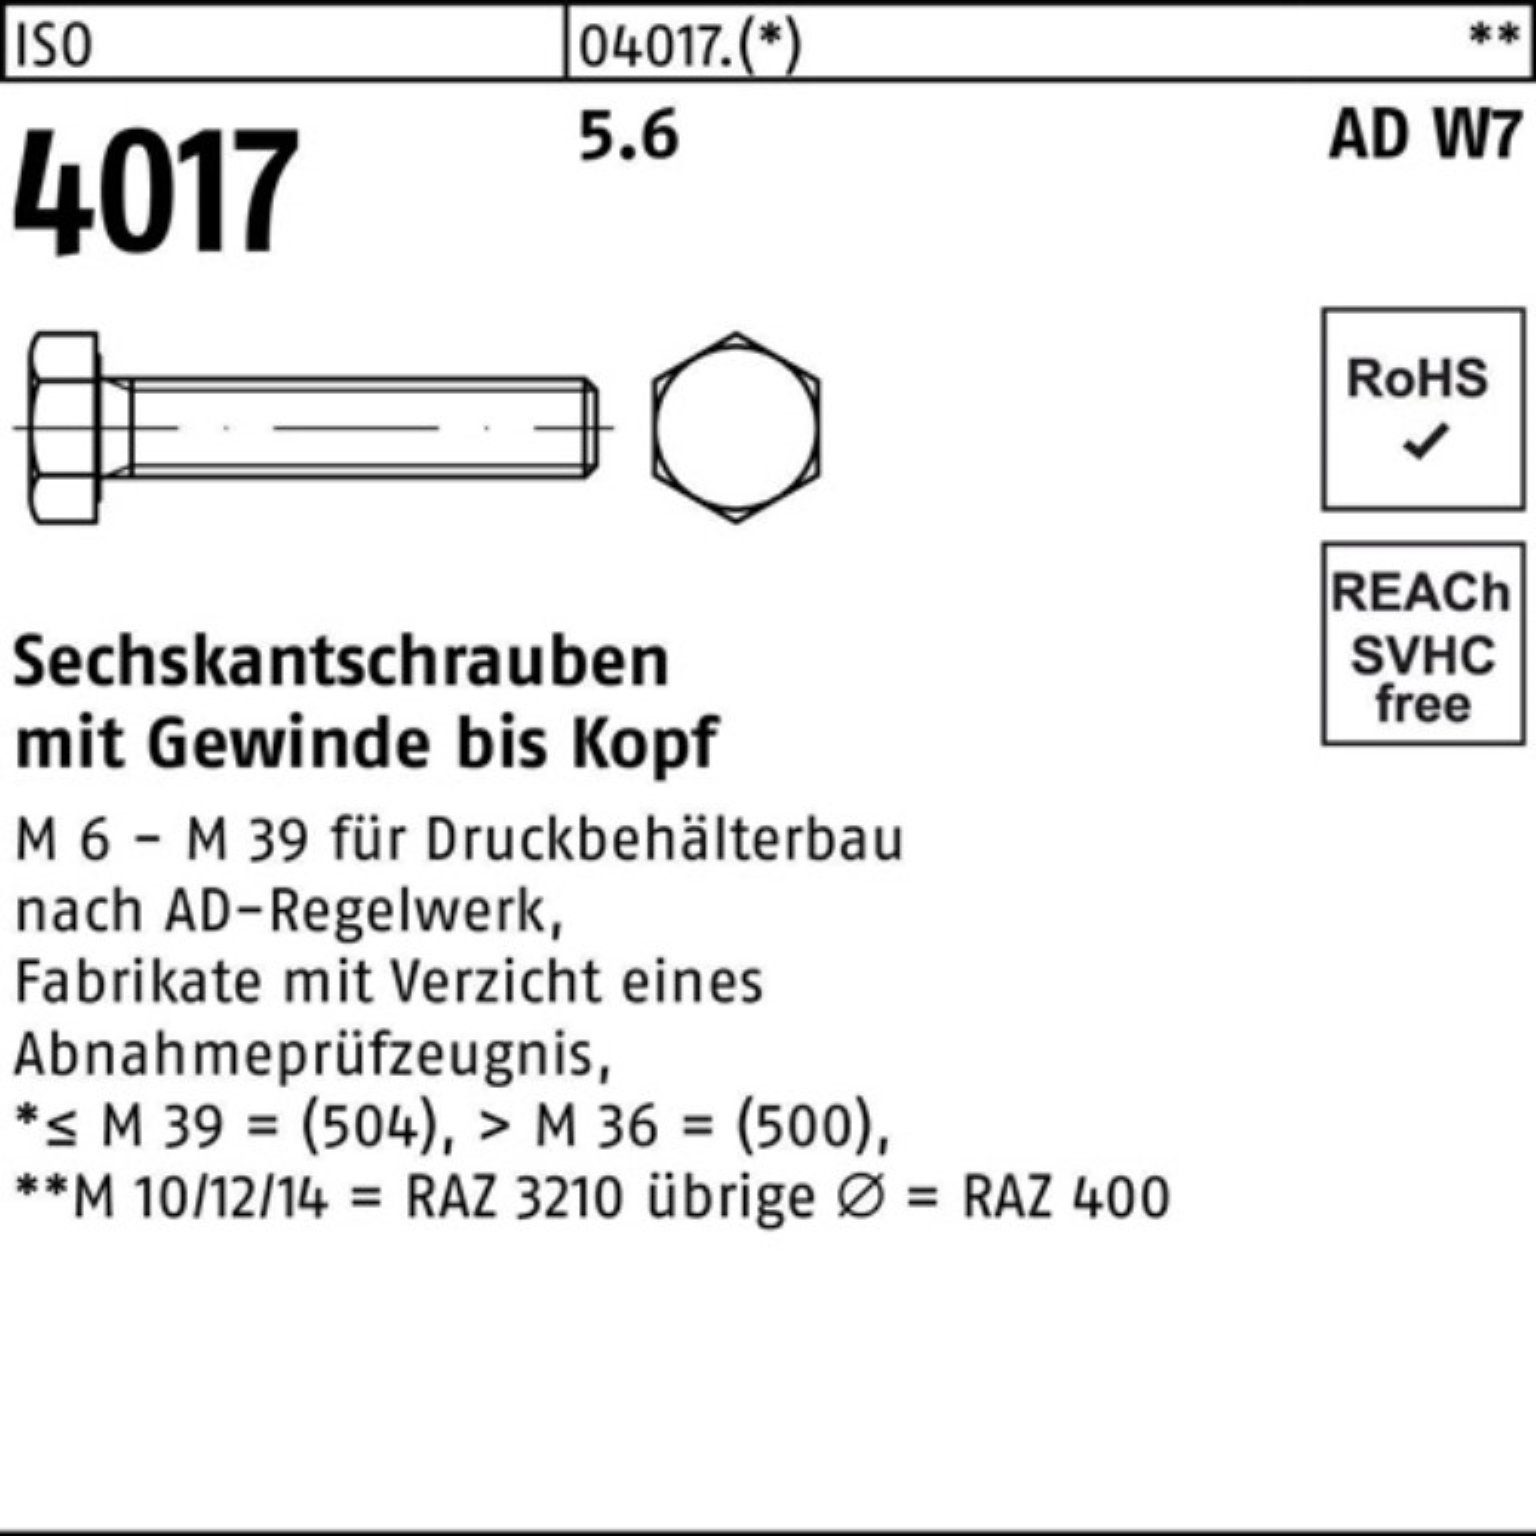 25 AD Sechskantschraube 5.6 4017 Sechskantschraube Bufab 100er ISO Pack Stück M20x 140 VG W7